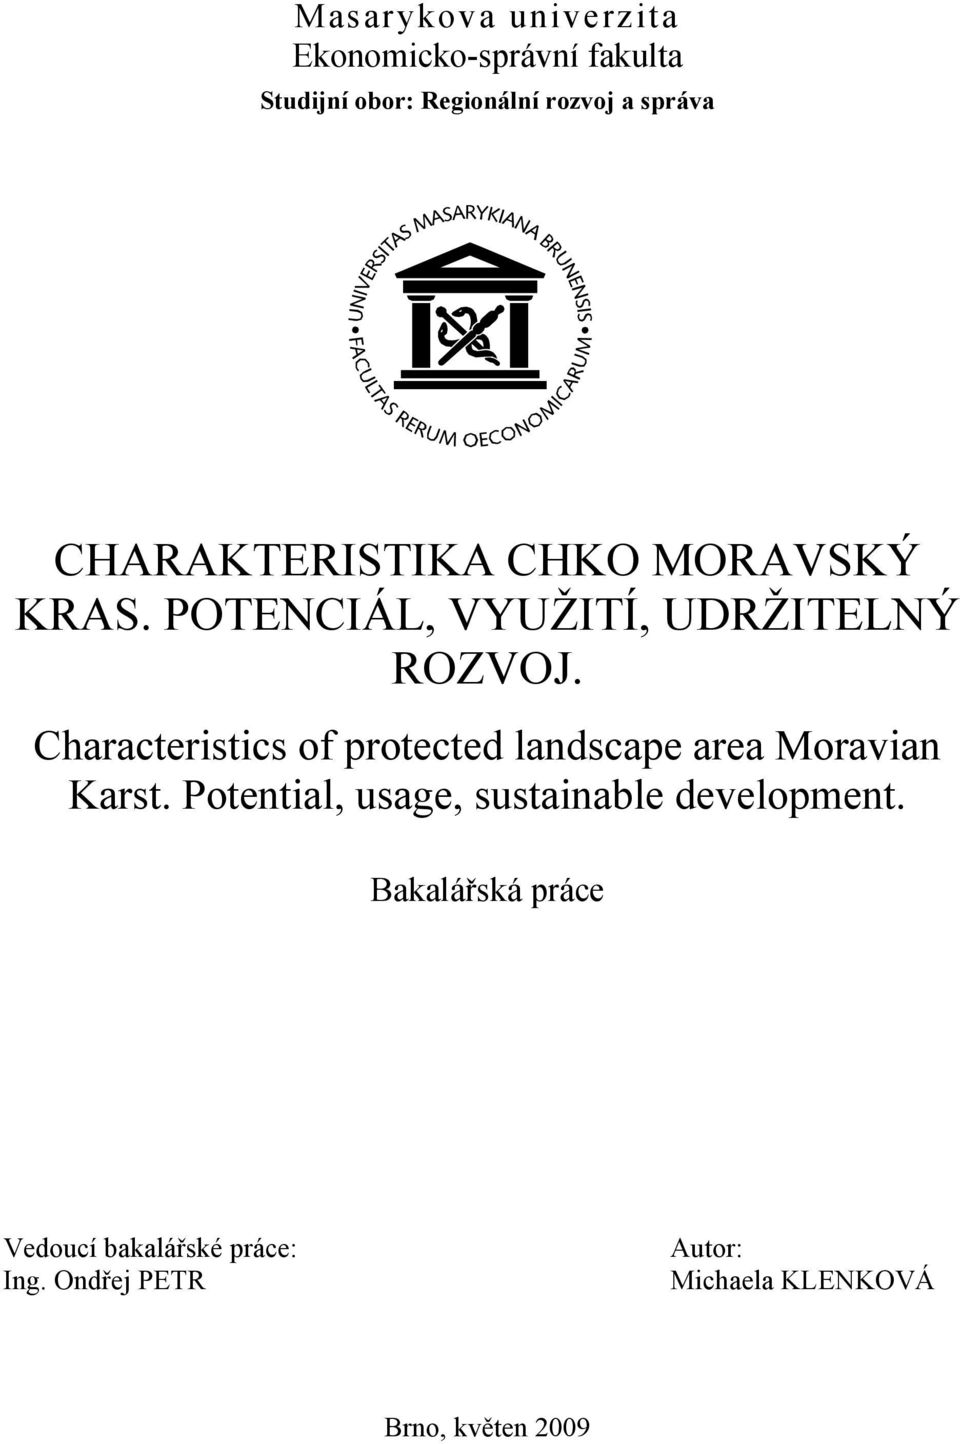 Characteristics of protected landscape area Moravian Karst.